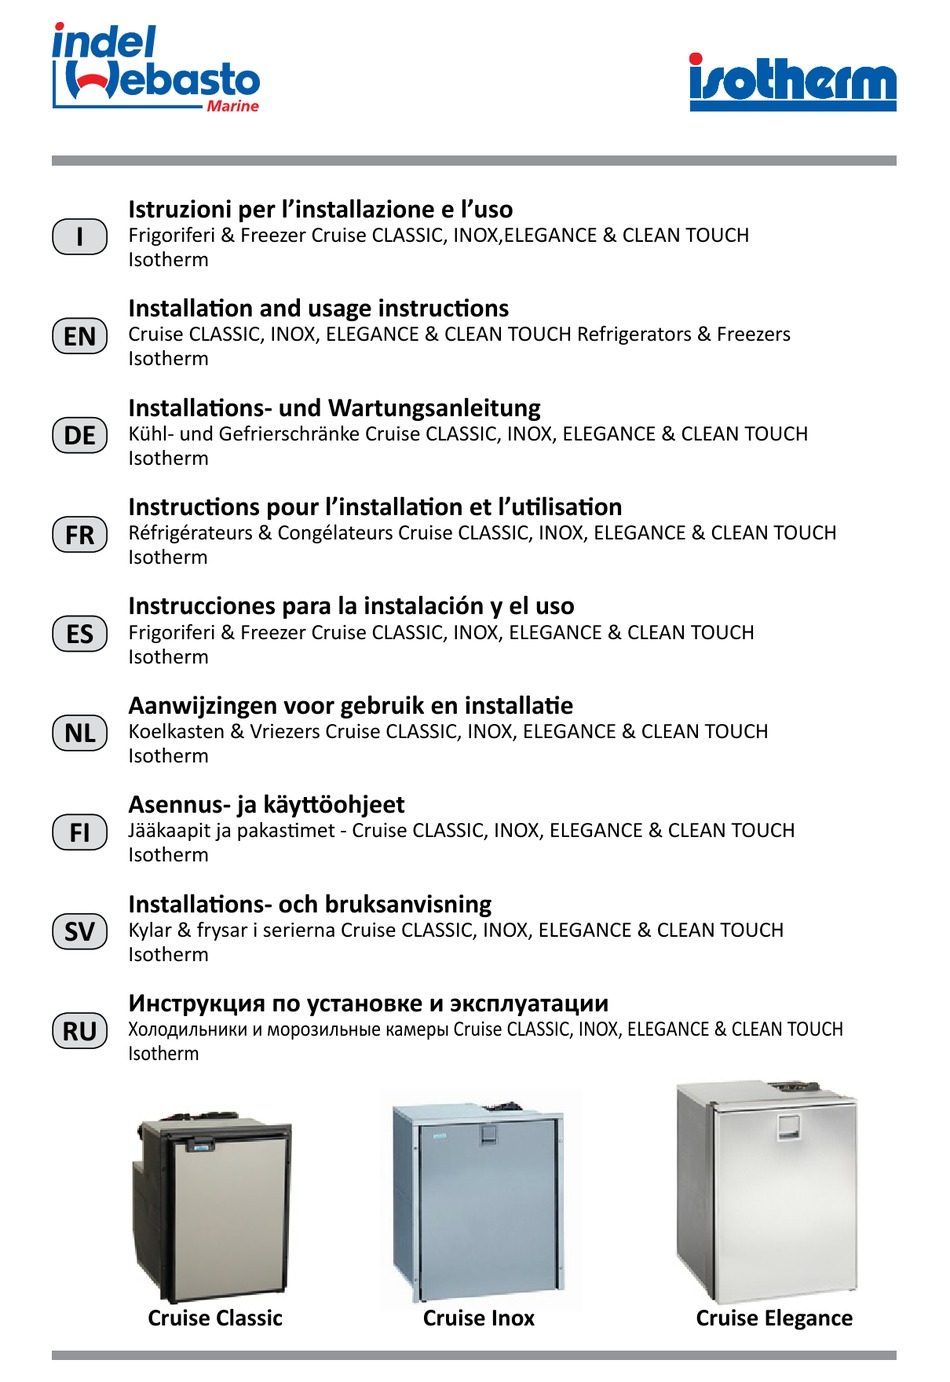 42++ Isotherm marine refrigerator manual info